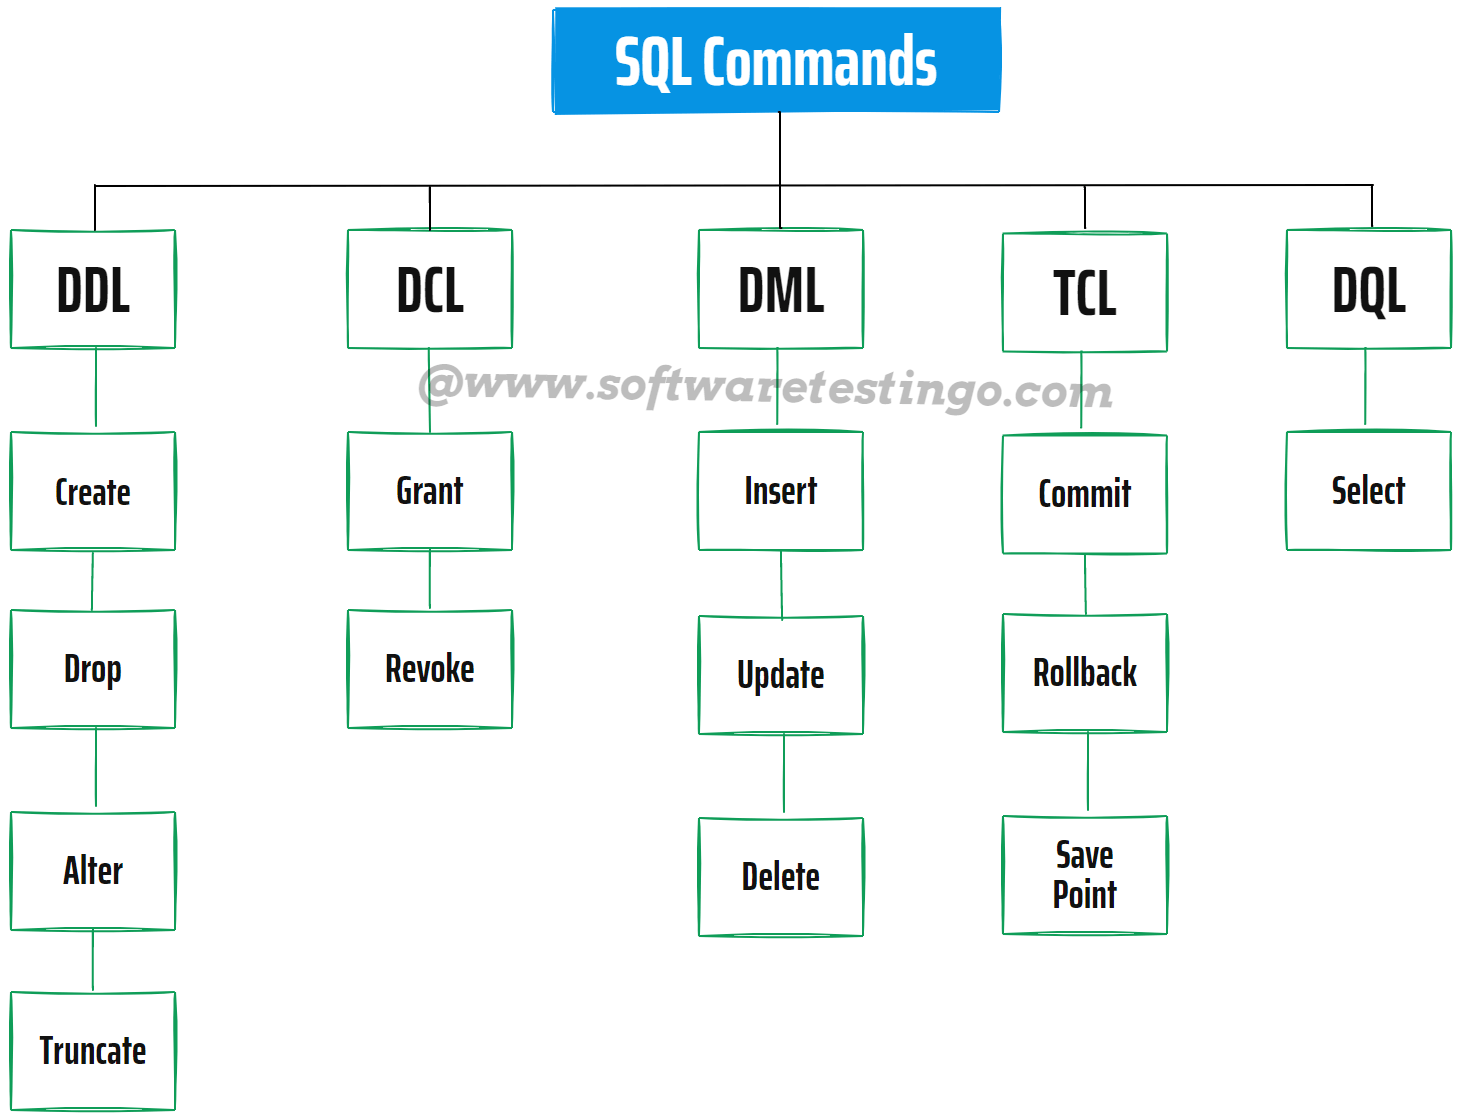 SQL Statements or SQL Commands